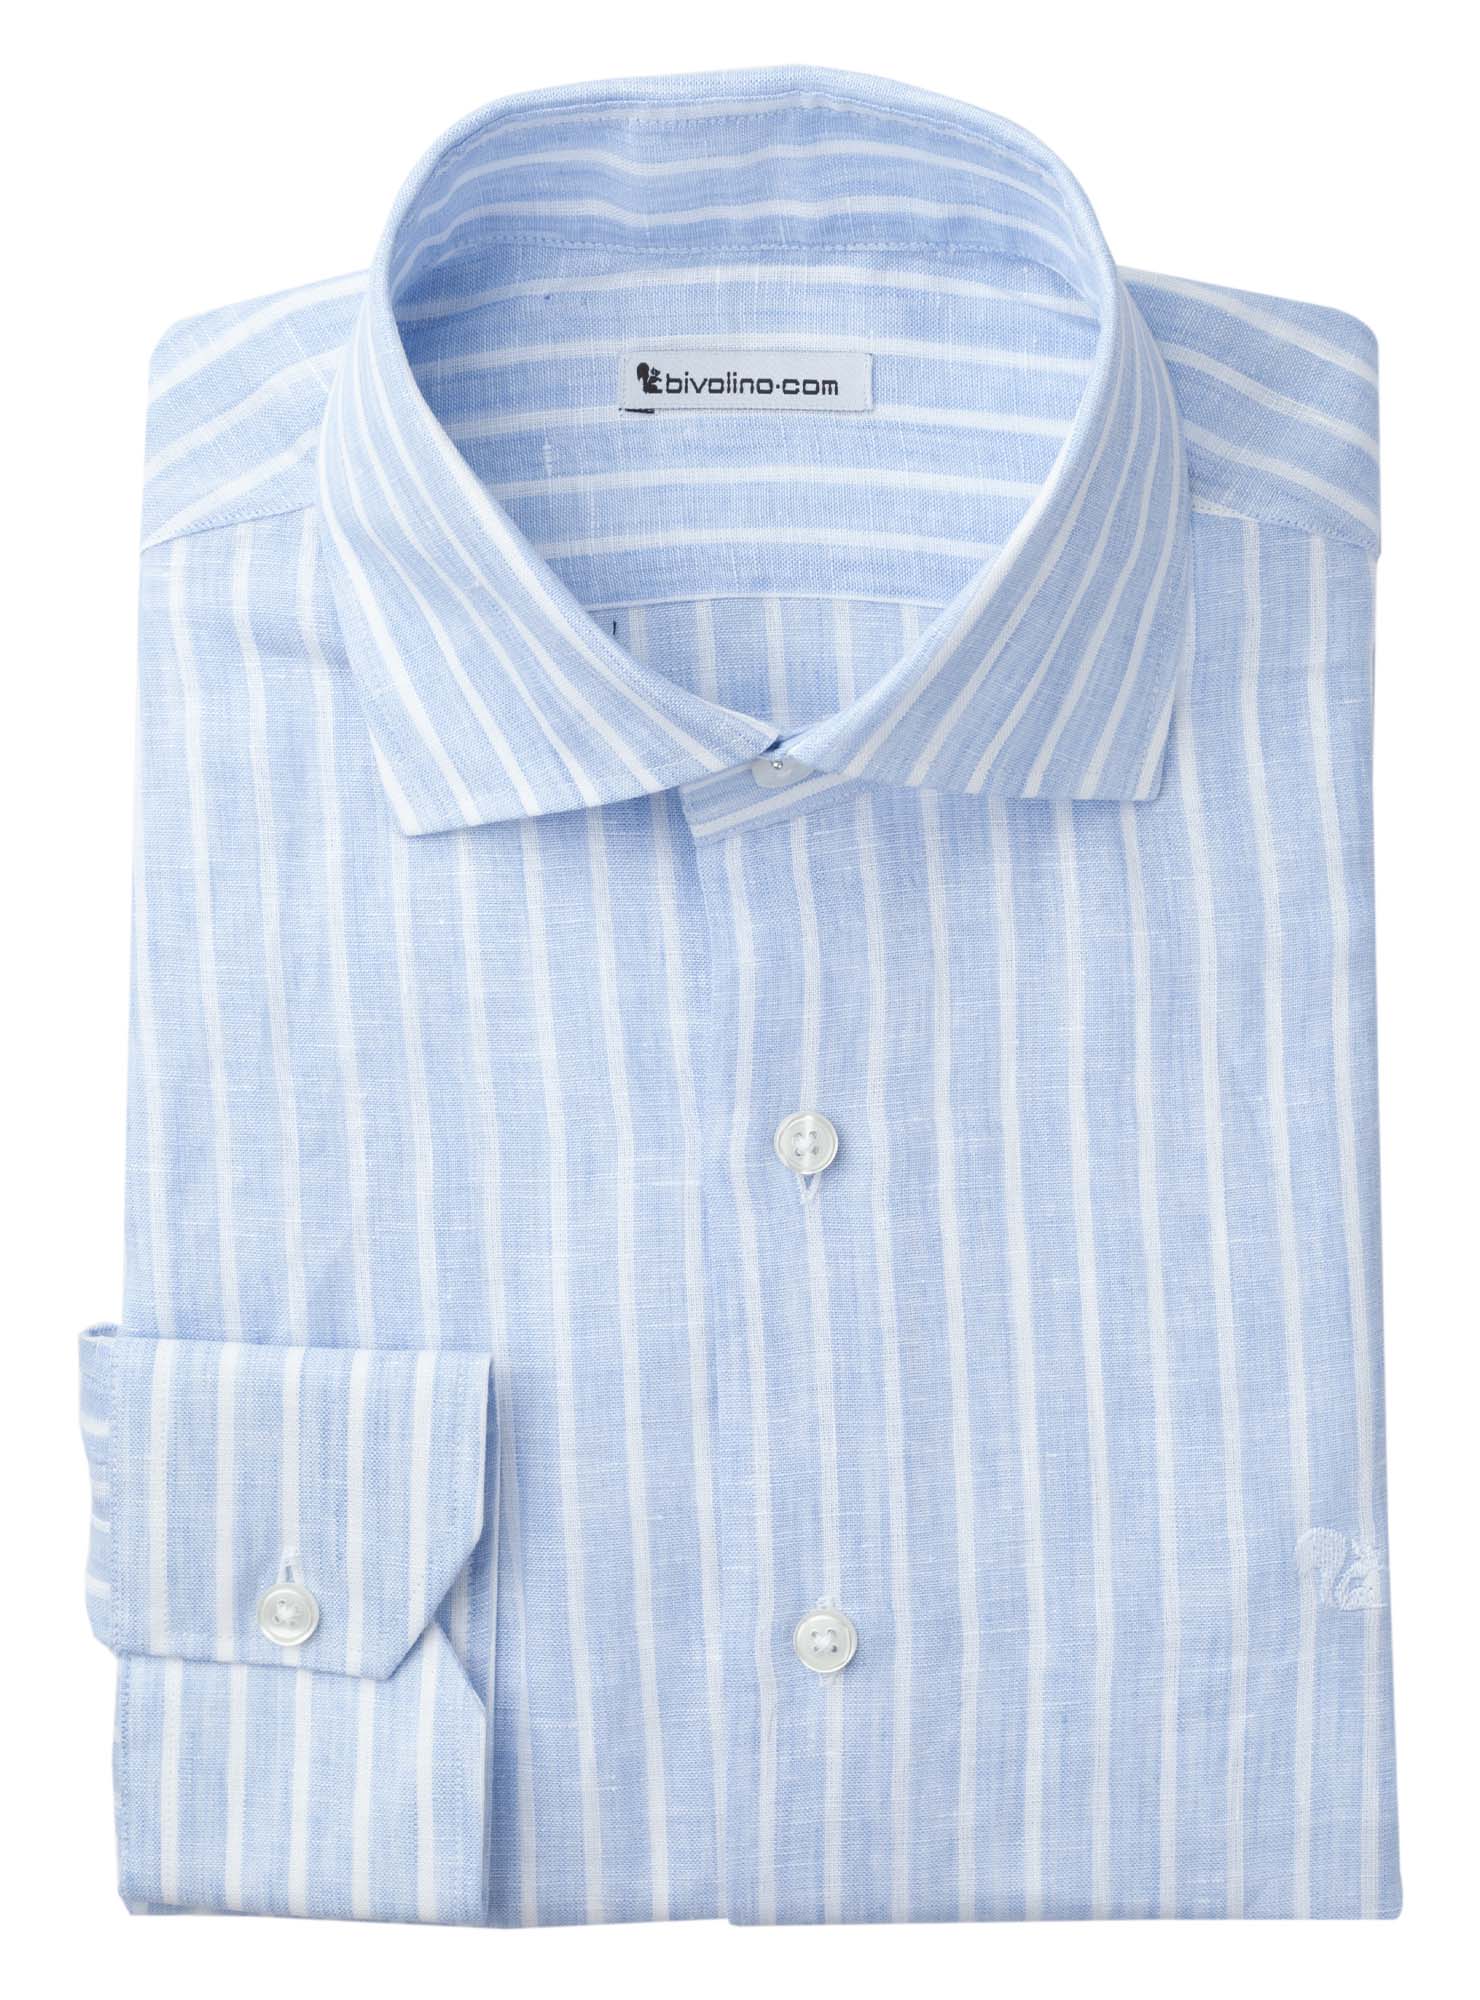 CAMPOBASSO - Camisa hombre lino rayas azules - NEON 1